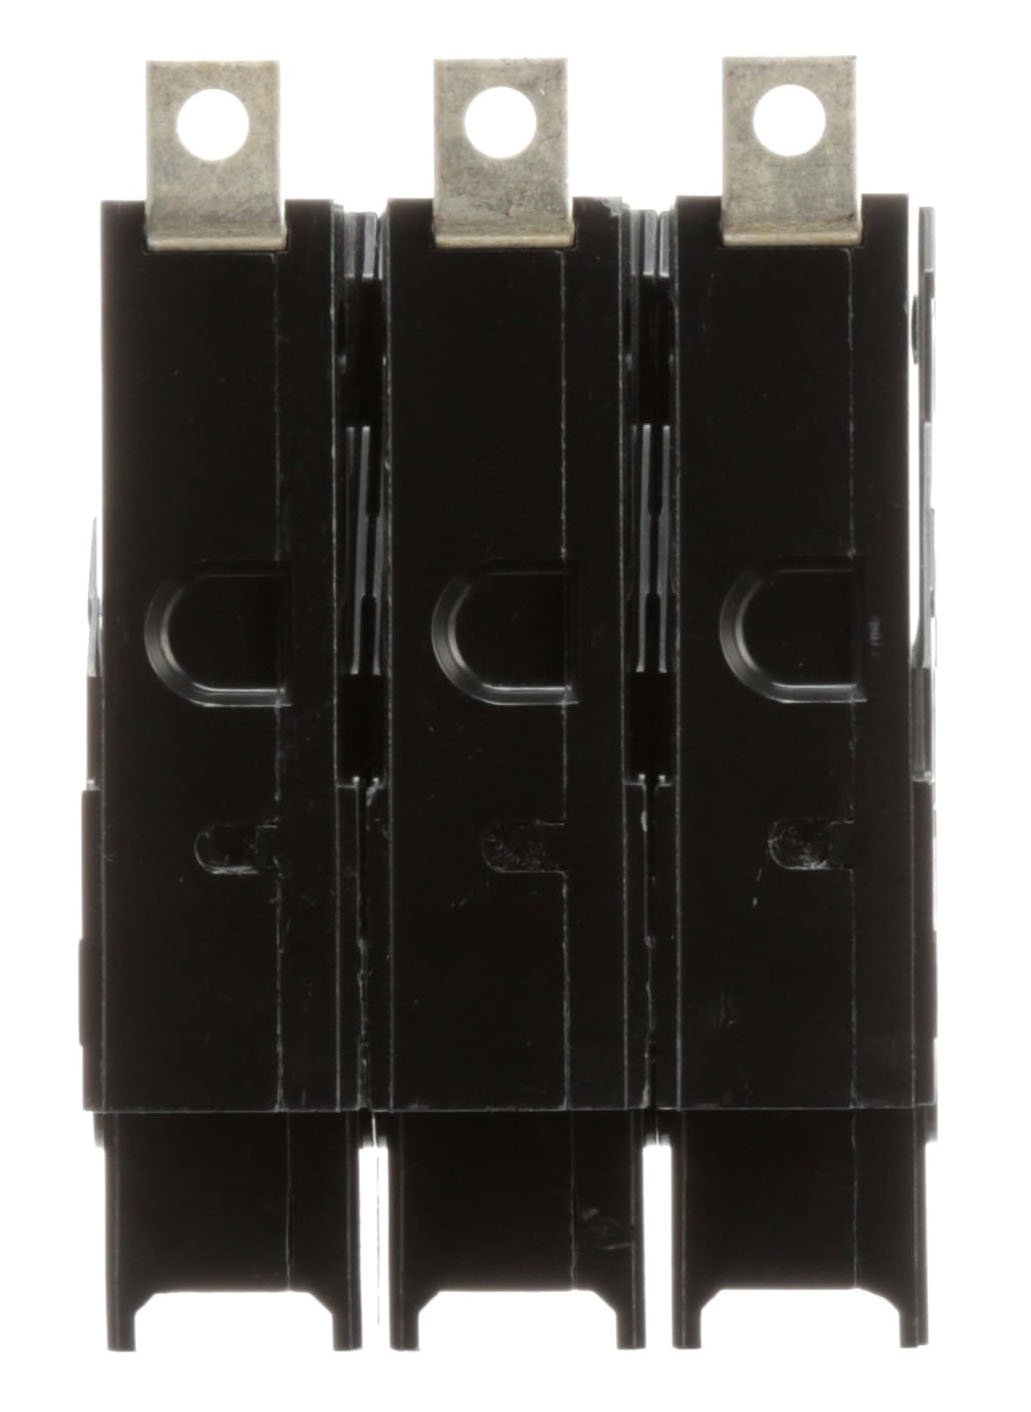 BQD345 - Siemens - 45 Amp Molded Case Circuit Breaker